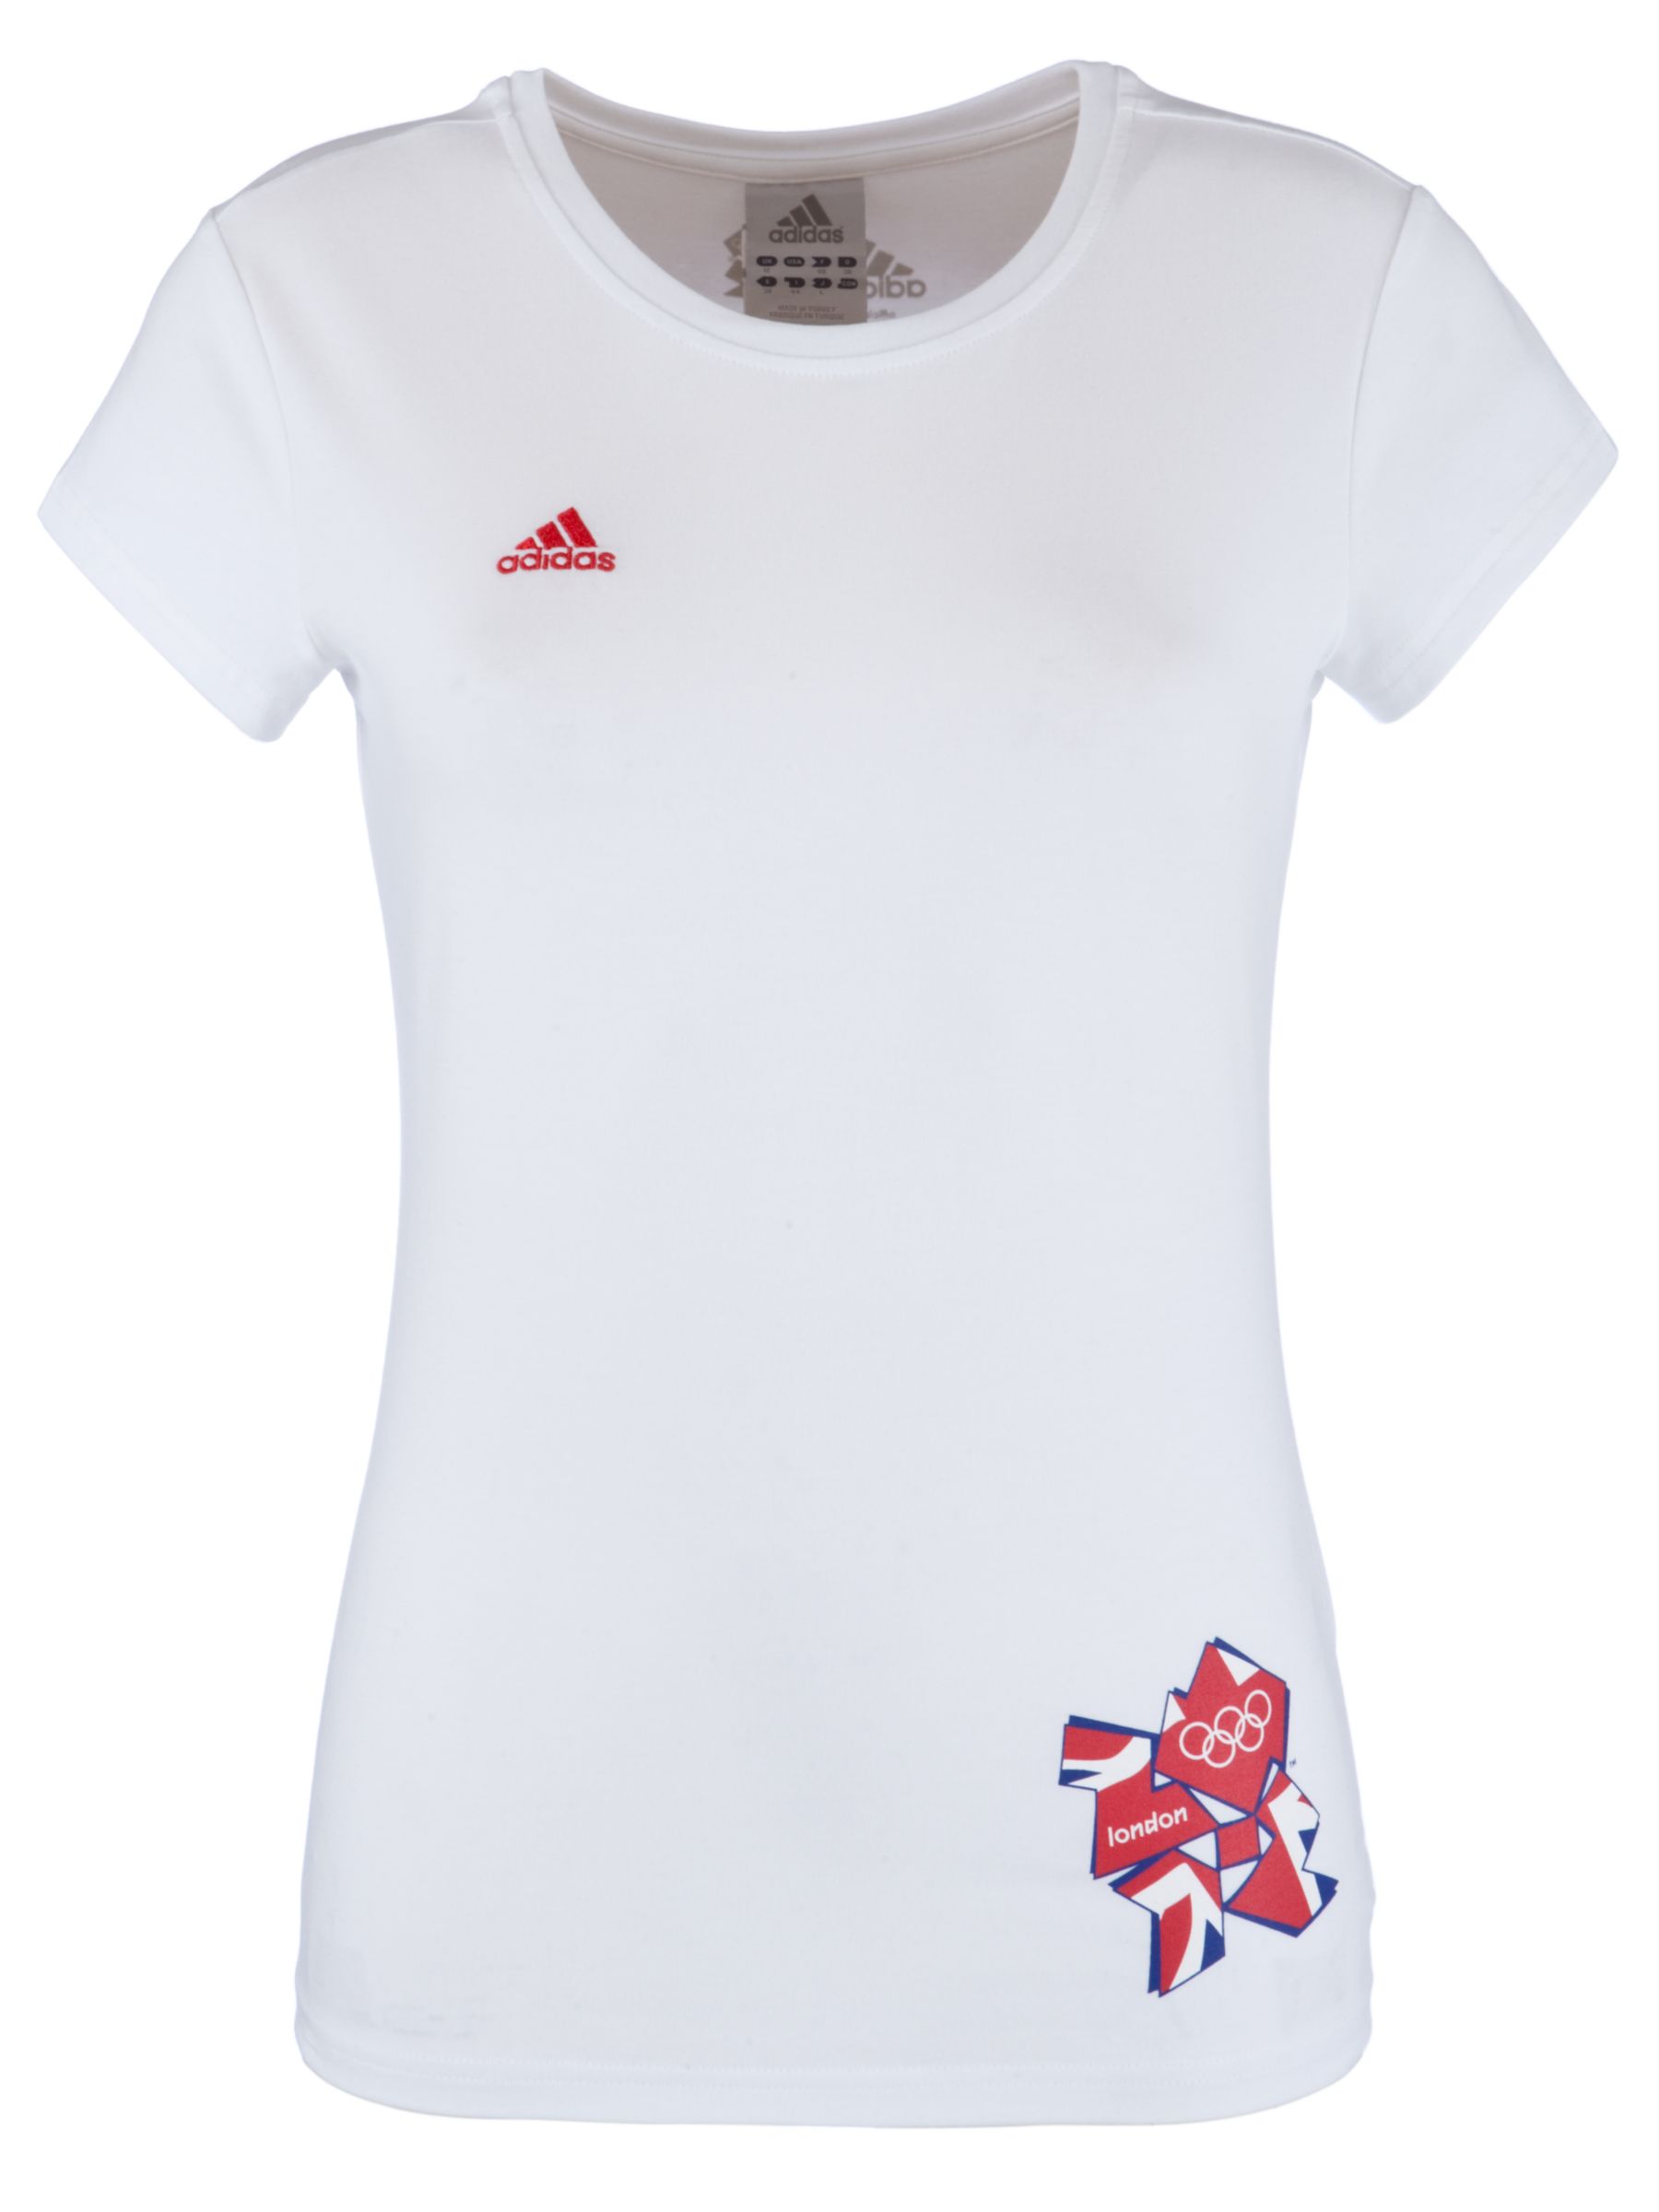 London 2012 Olympic Union Jack T-Shirt,